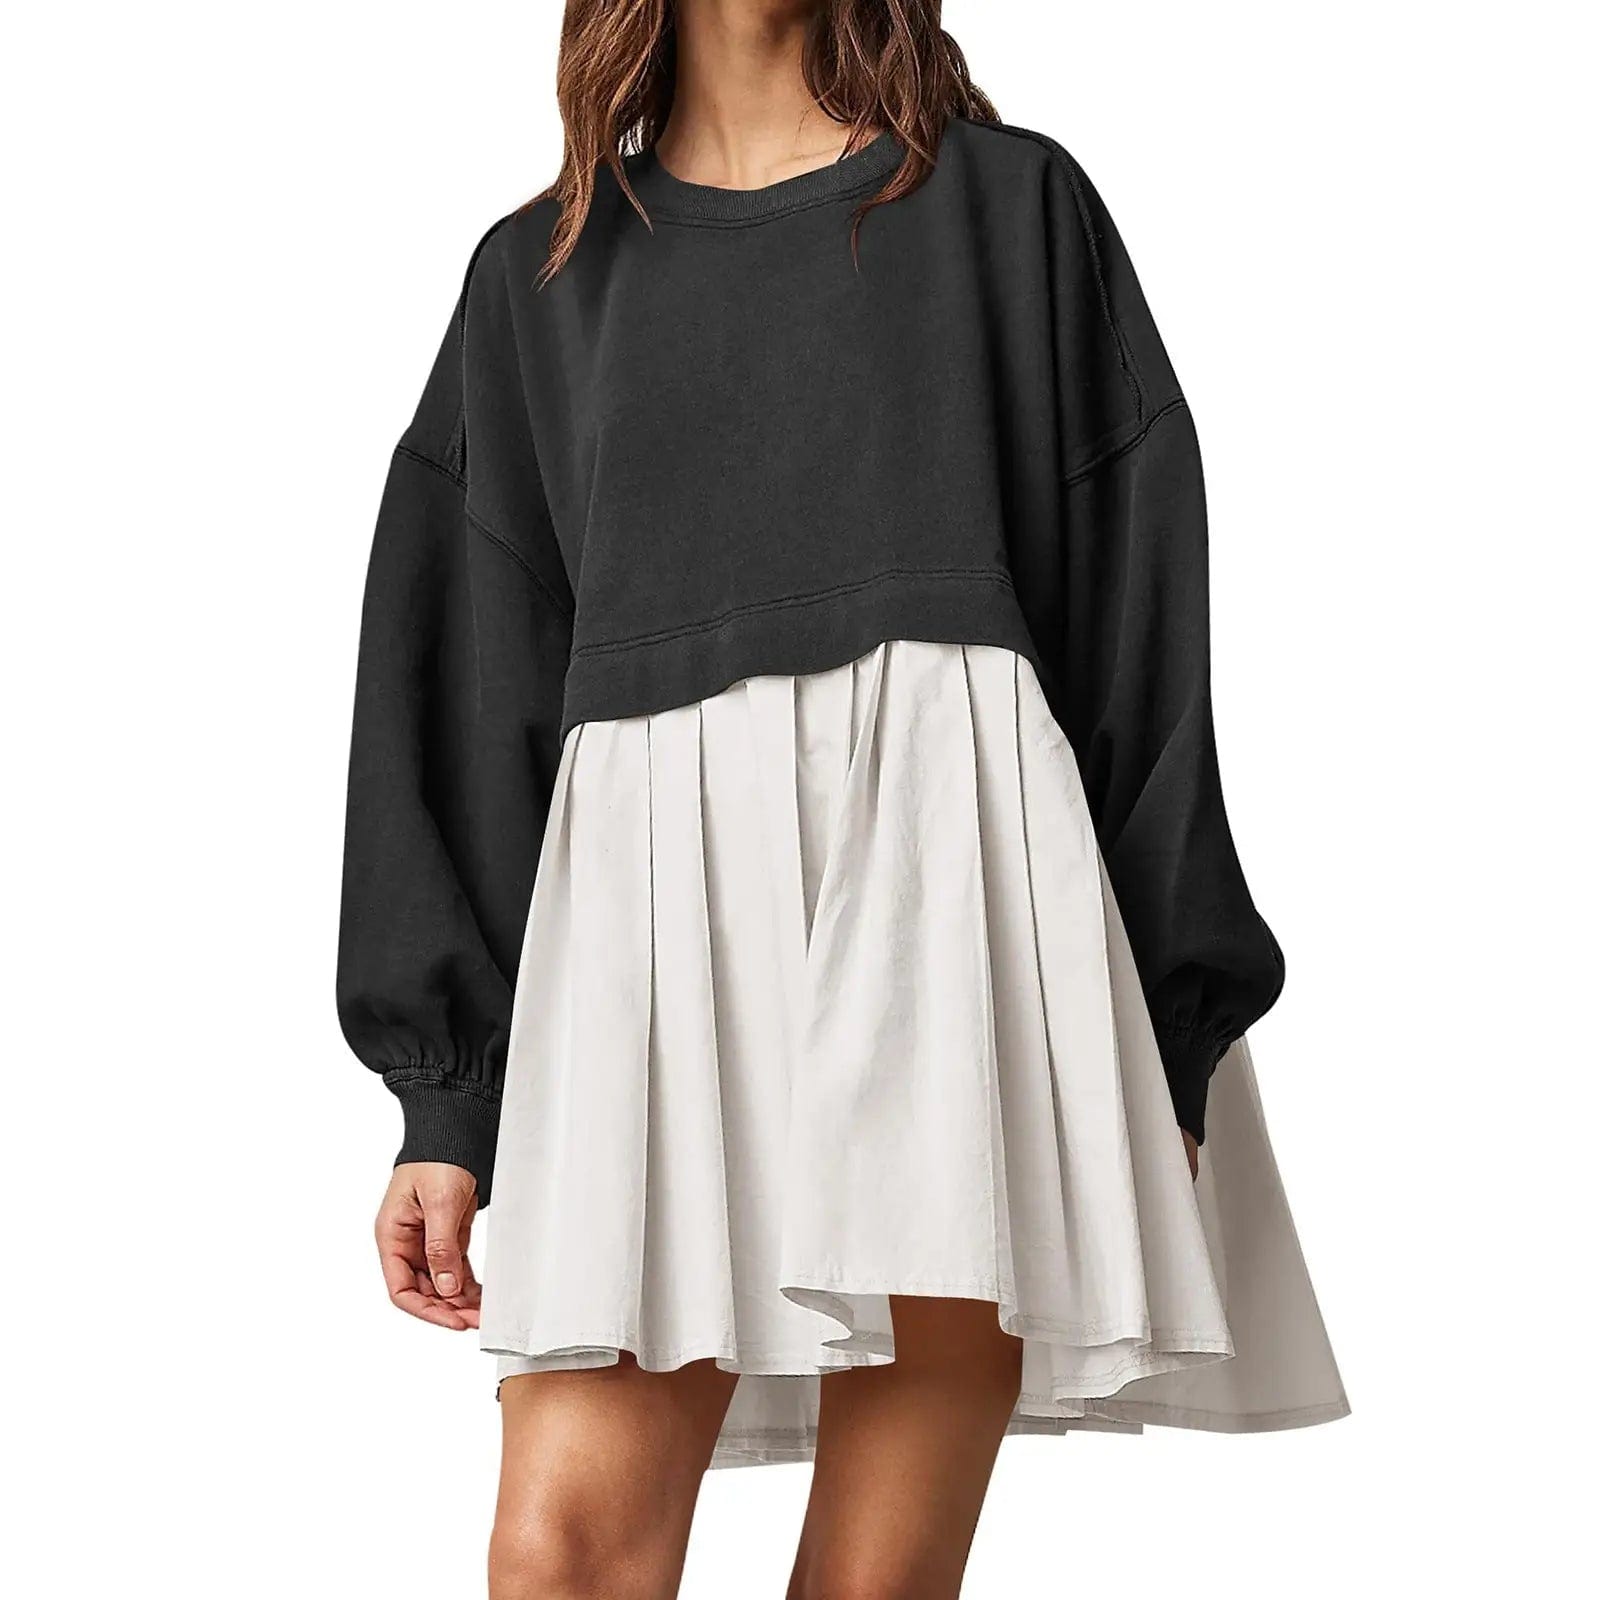 Cheky Black White / S Womens Sweatshirt Dress Loose Long Sleeve Crewneck Pullover Tops Relaxed Fit Sweatshirts Short Dress